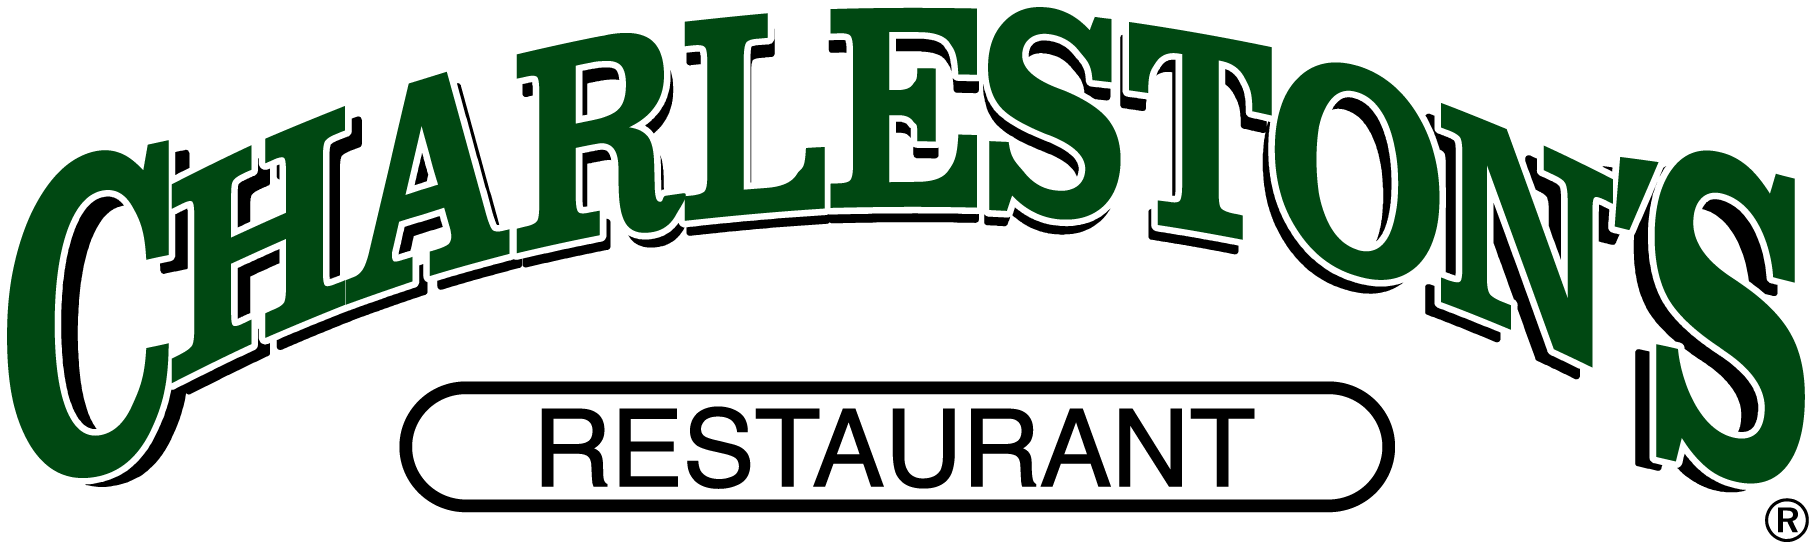 Charleston's Logo